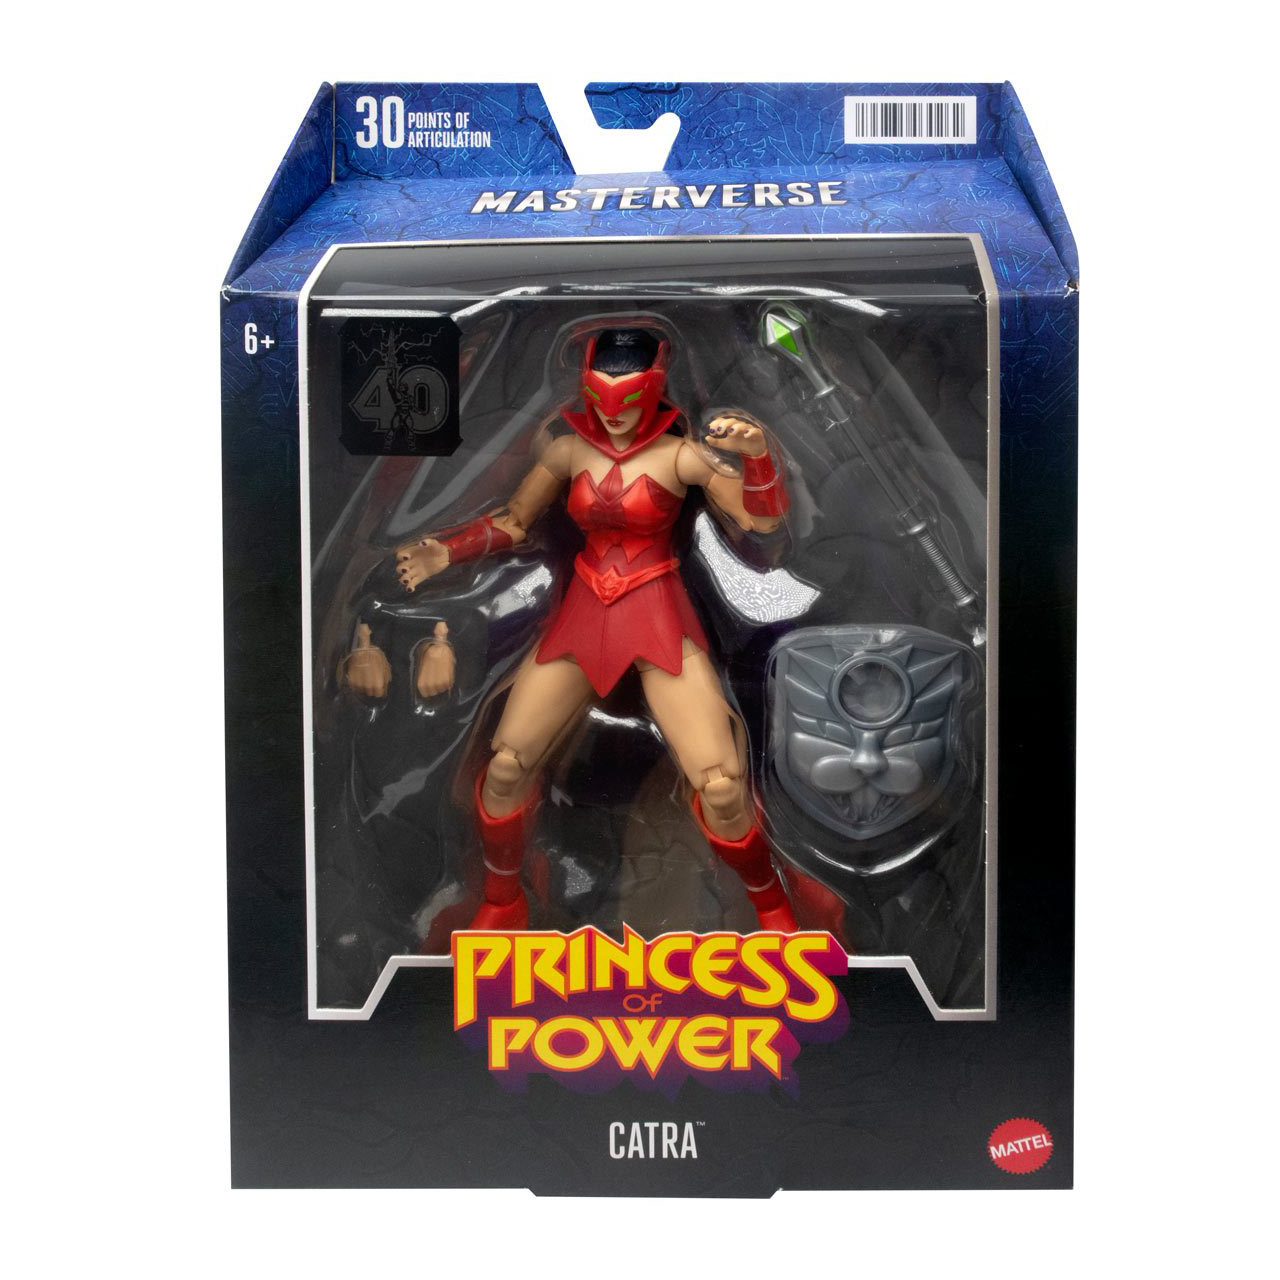 Masters of the Universe Masterverse Princess of Power: Catra